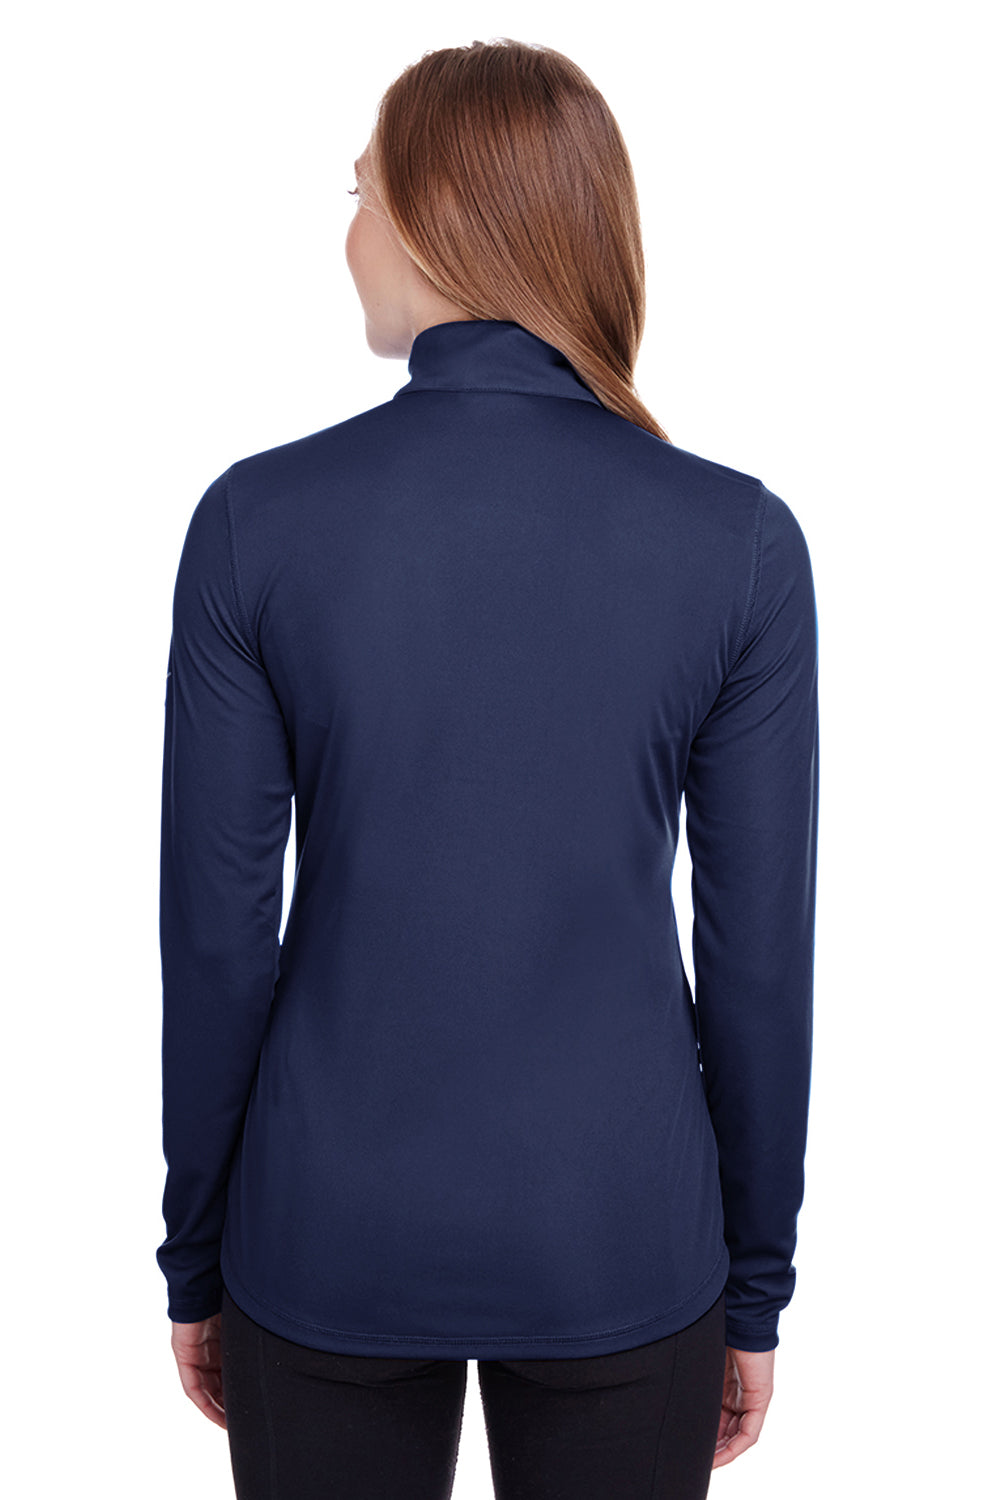 Puma 596803 Womens Icon Performance Moisture Wicking Full Zip Sweatshirt Navy Blue Back